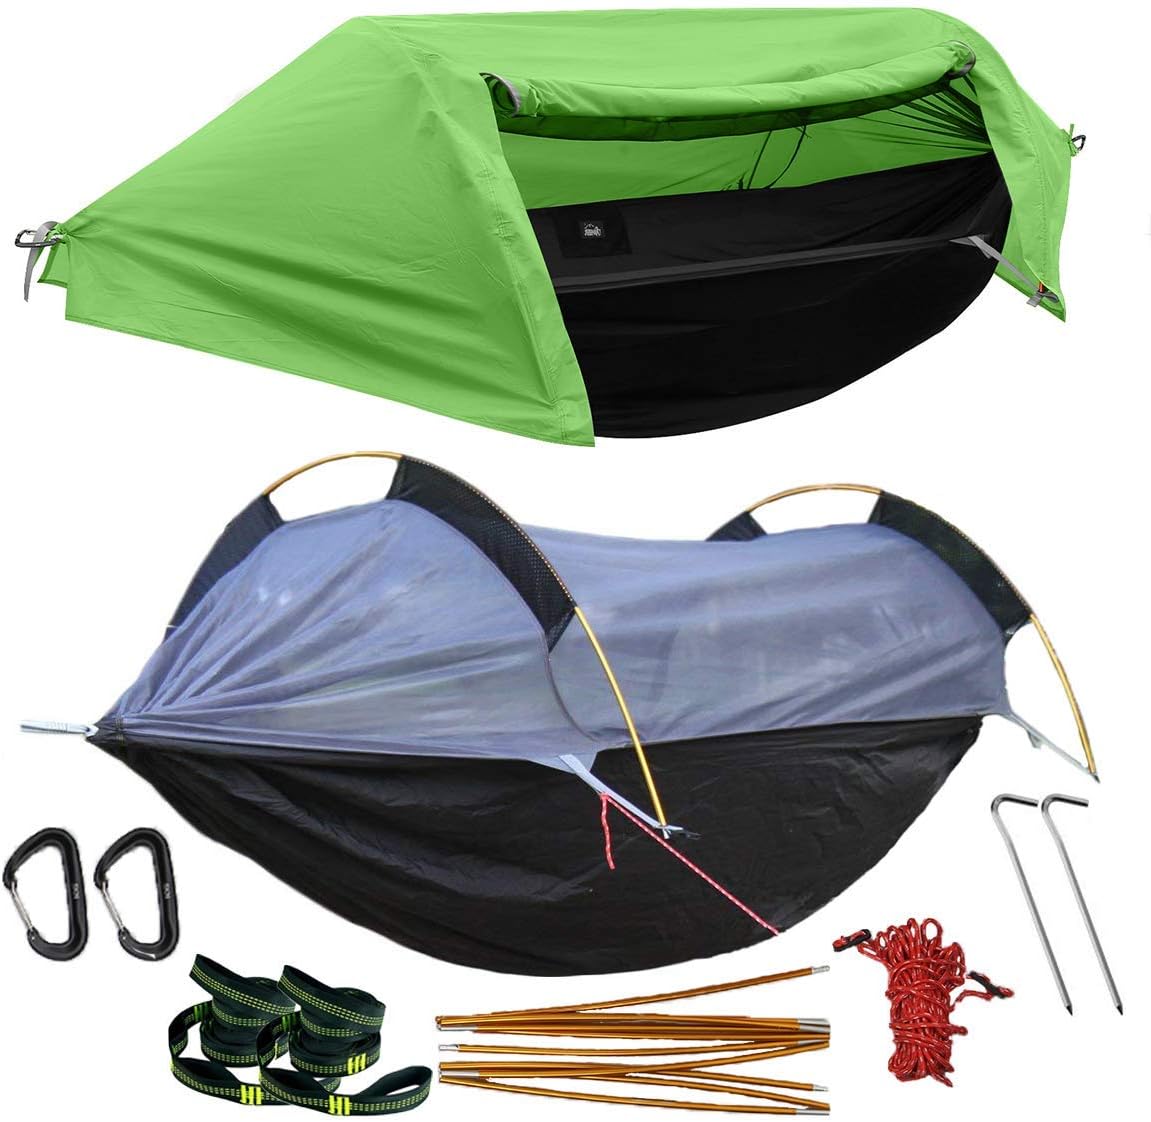 wwintming hammock tent green nylon pop up tent